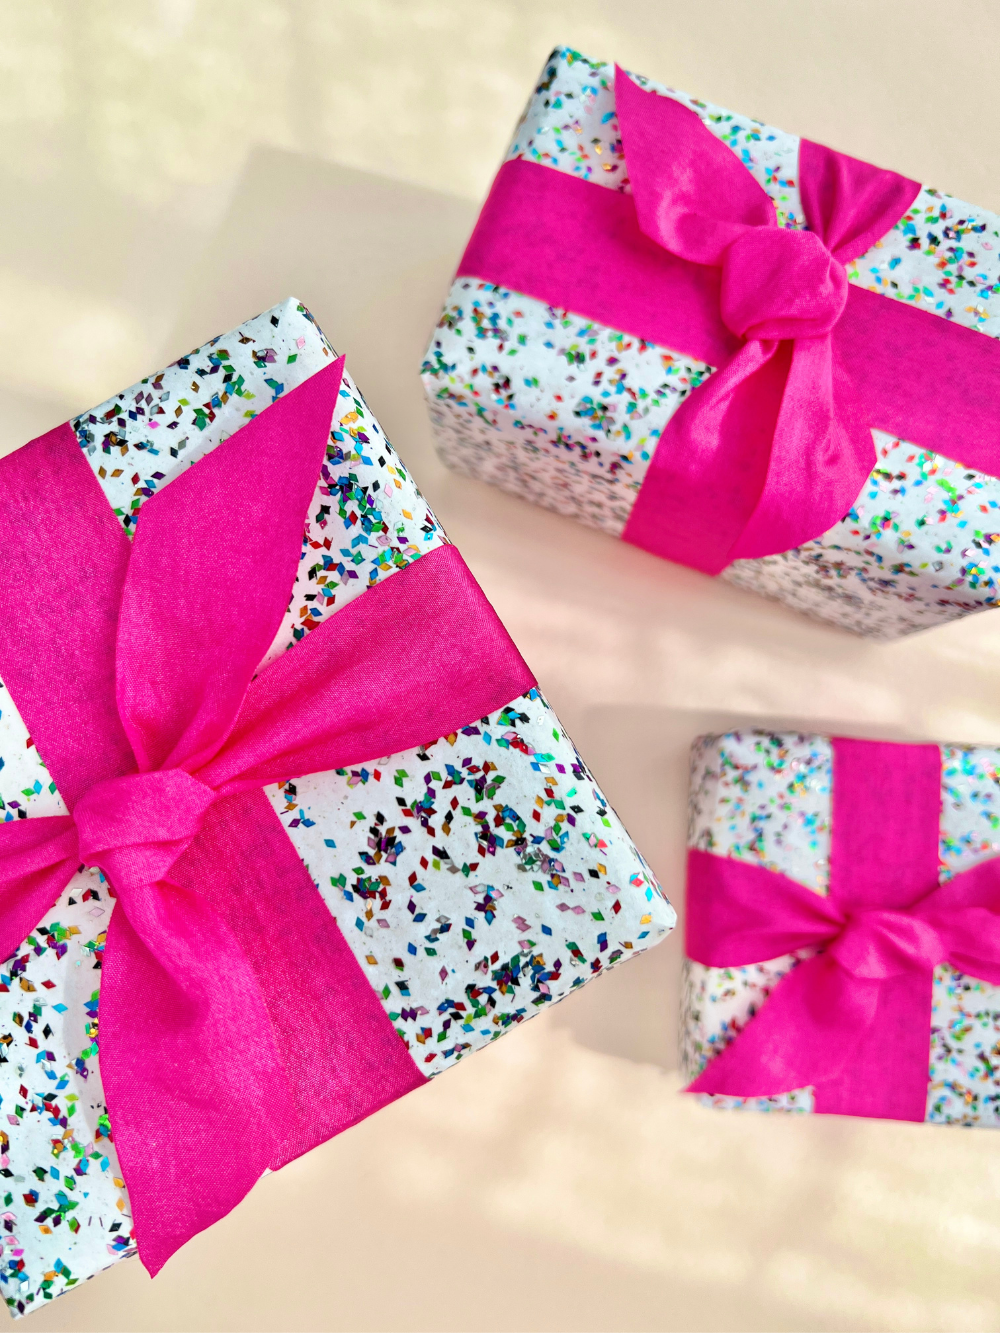 The Make A Wish Gift Box